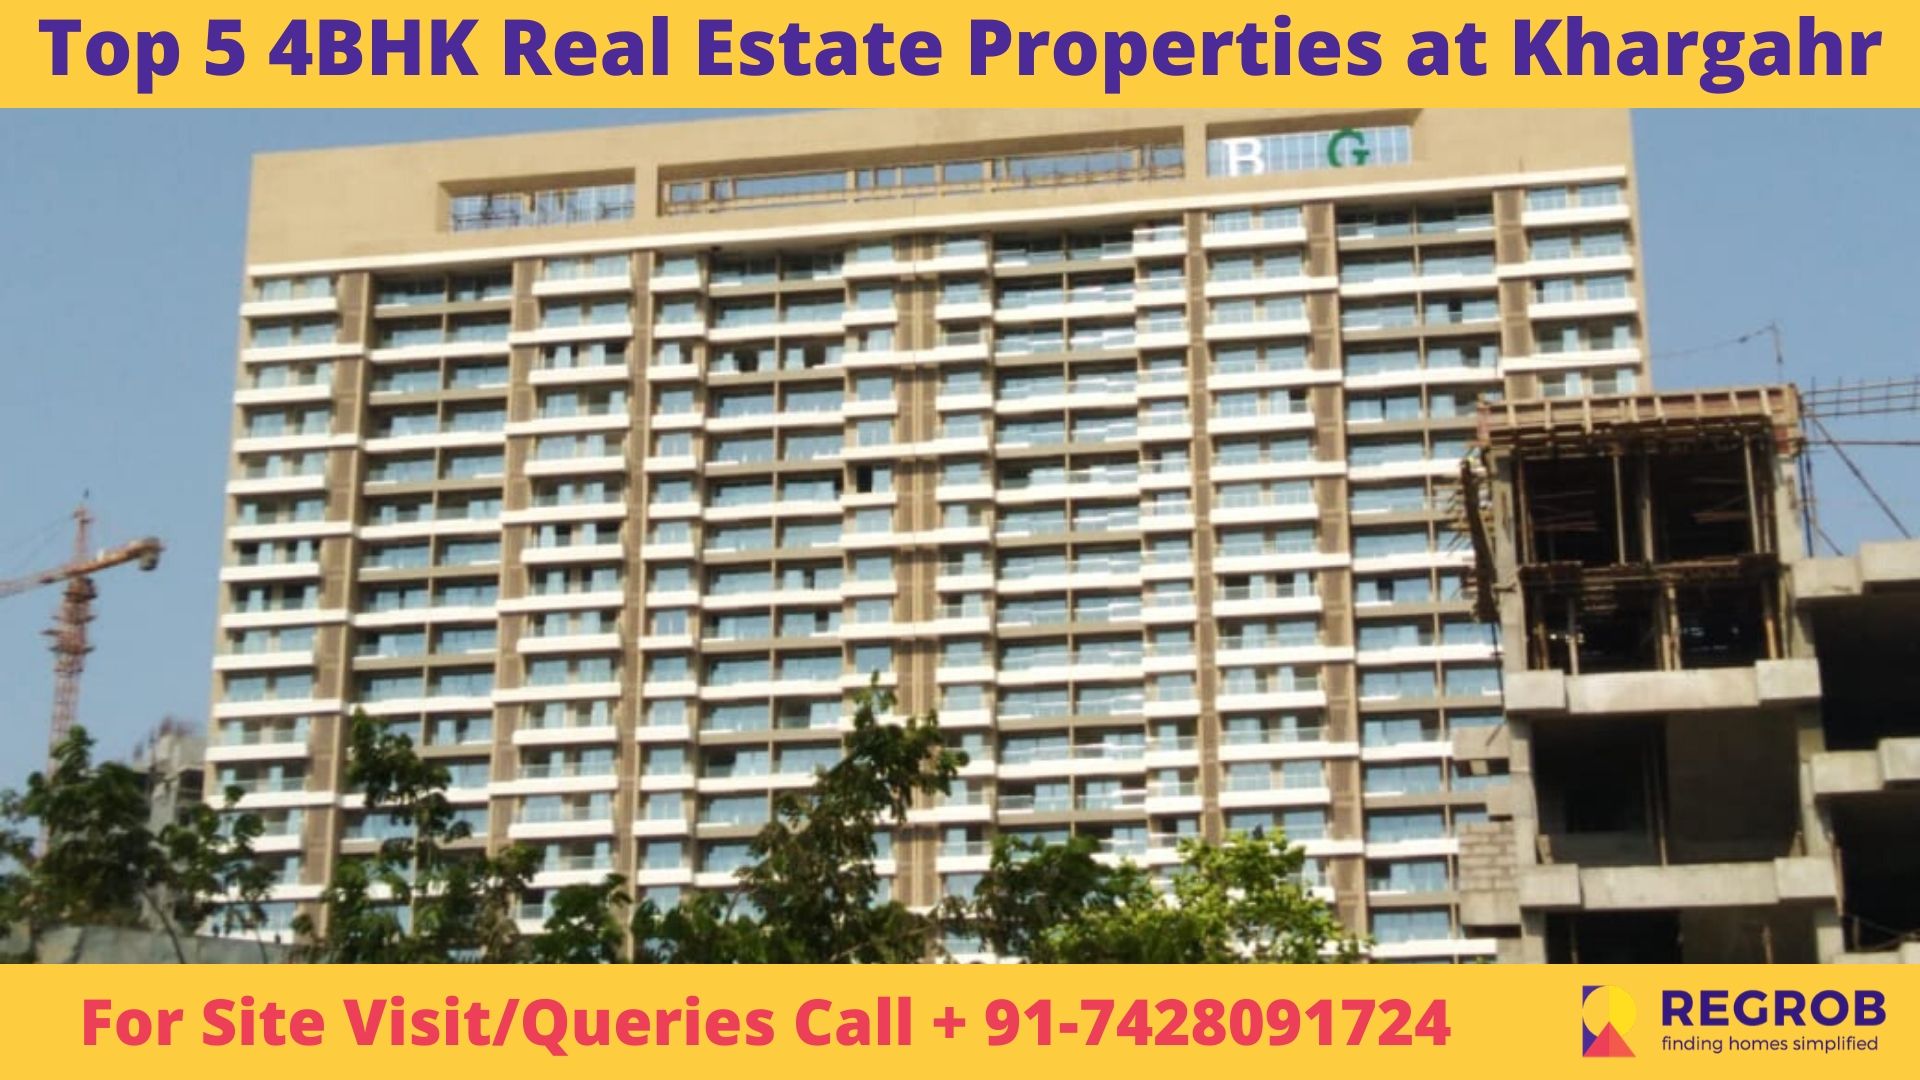 Top 5 4BHK Real Estate Properties at Khargahr